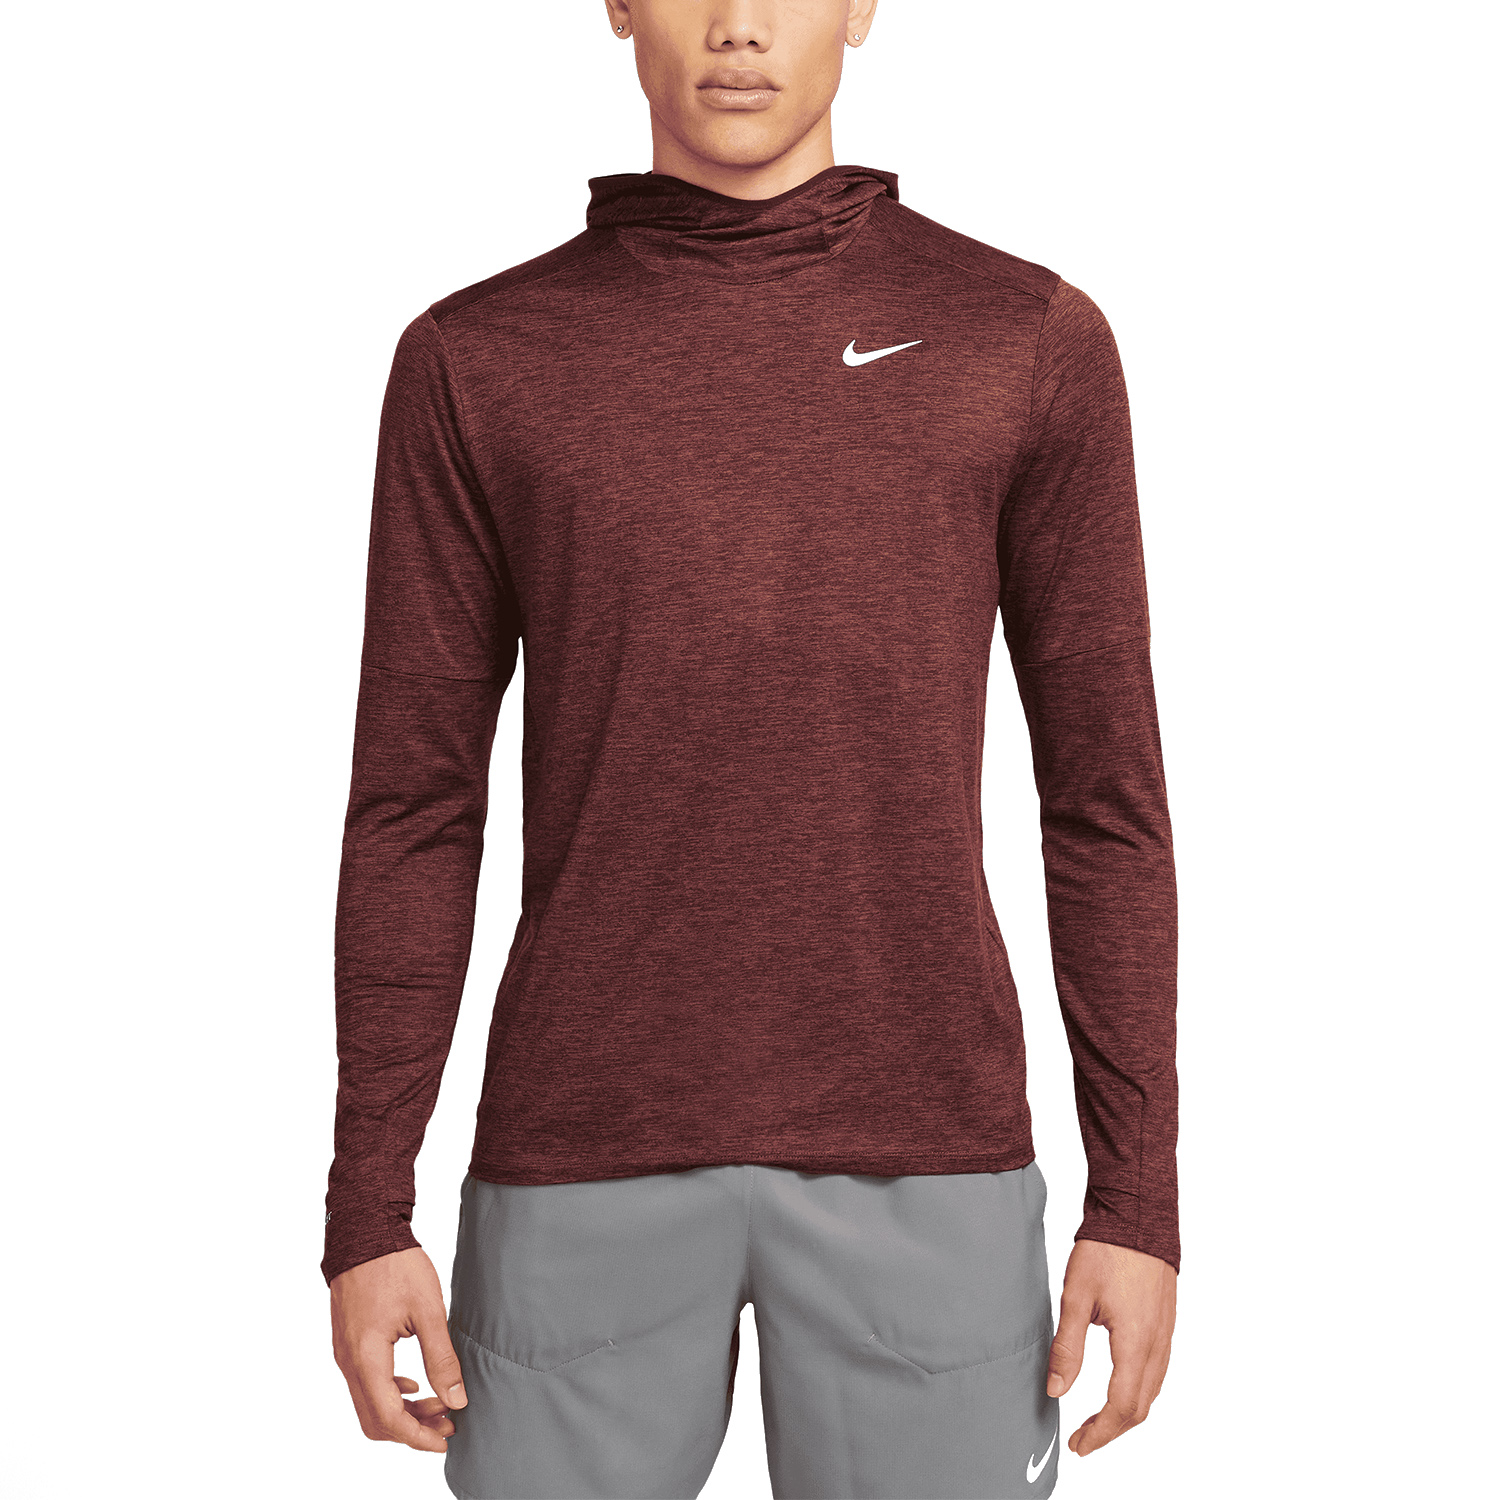 Nike Dri-FIT Element Shirt - Night Maroon/Cedar/Heather/Reflective Silver